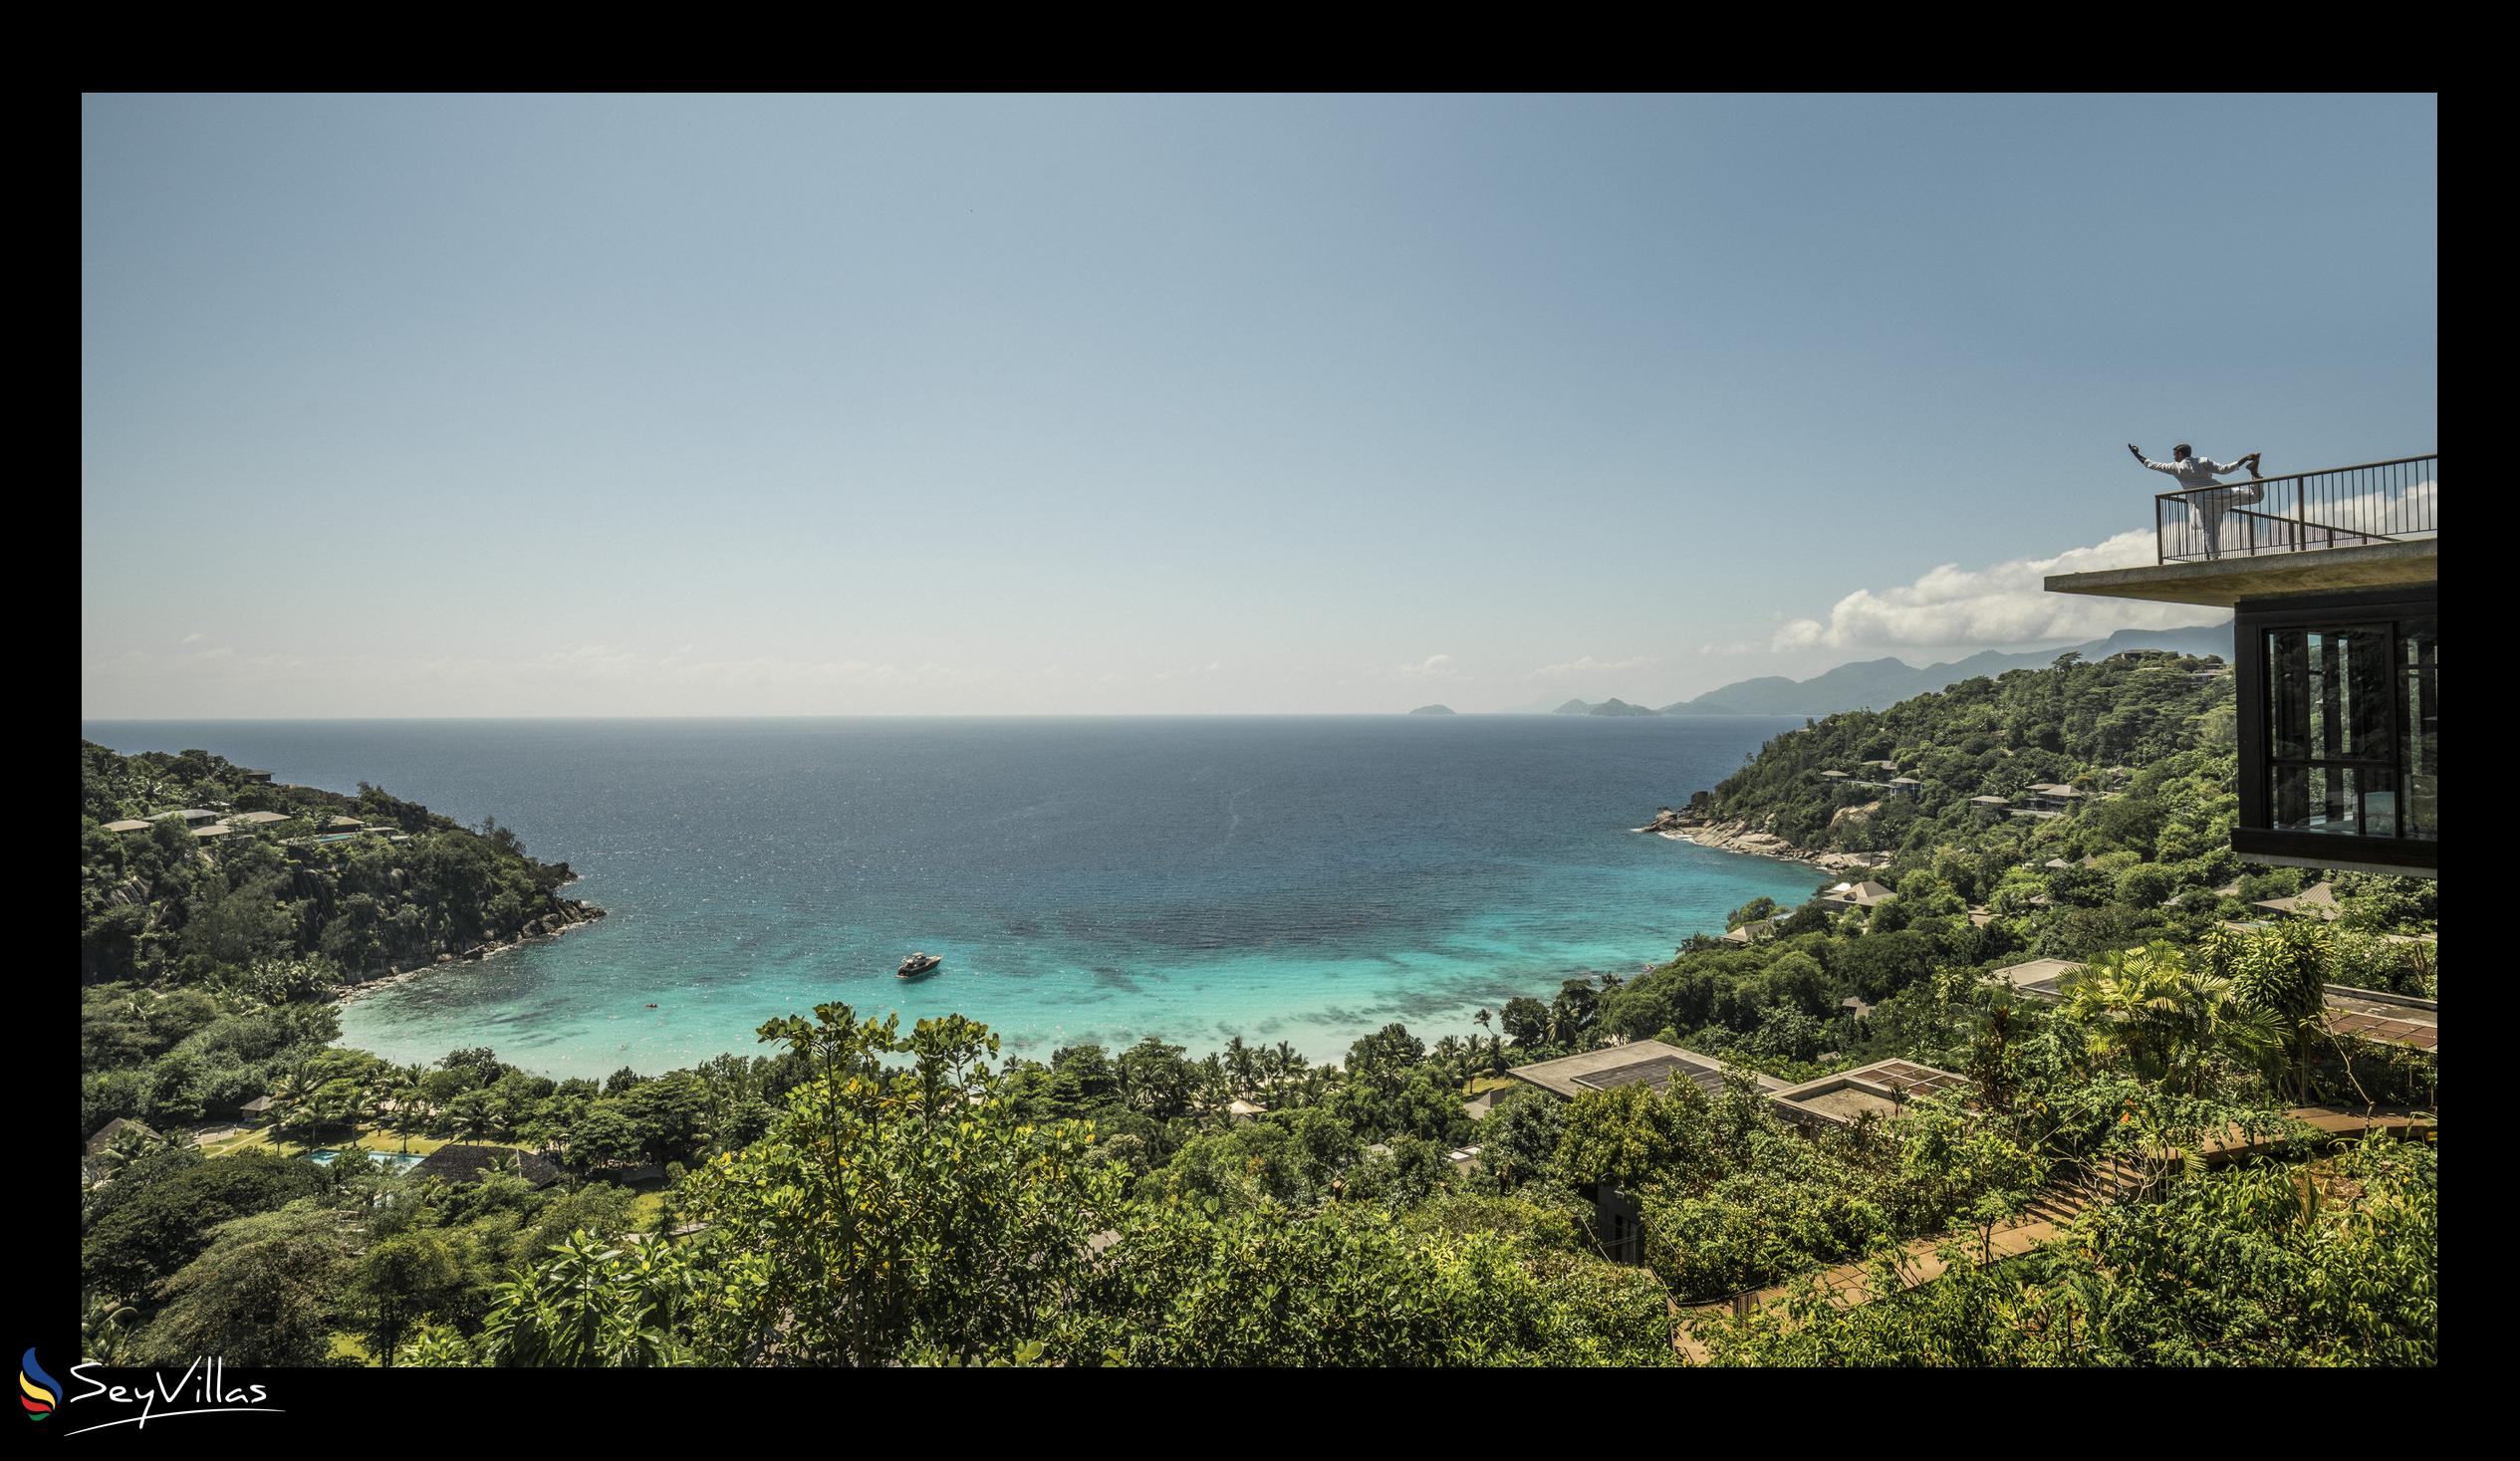 Photo 109: Four Seasons Resort - Outdoor area - Mahé (Seychelles)